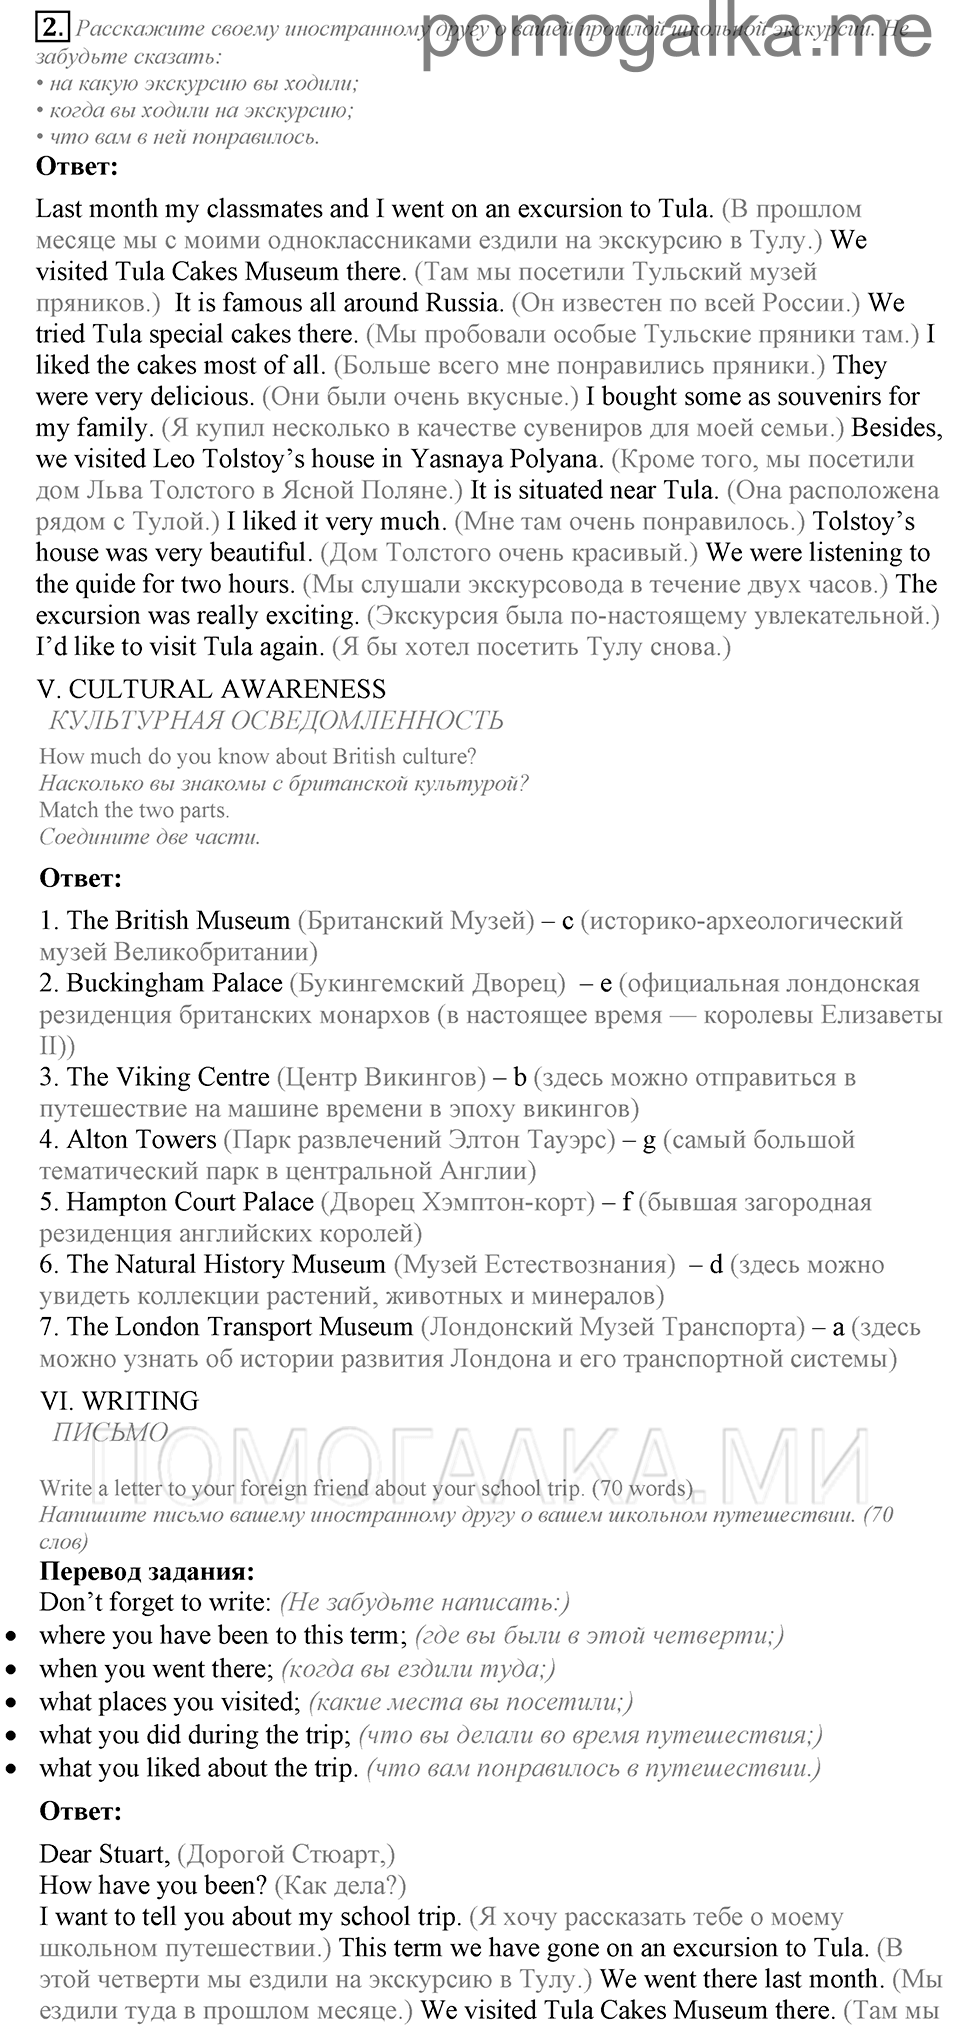 Unit 6 Lesson 7-8 задание №2 английский язык 5 класс Кузовлев